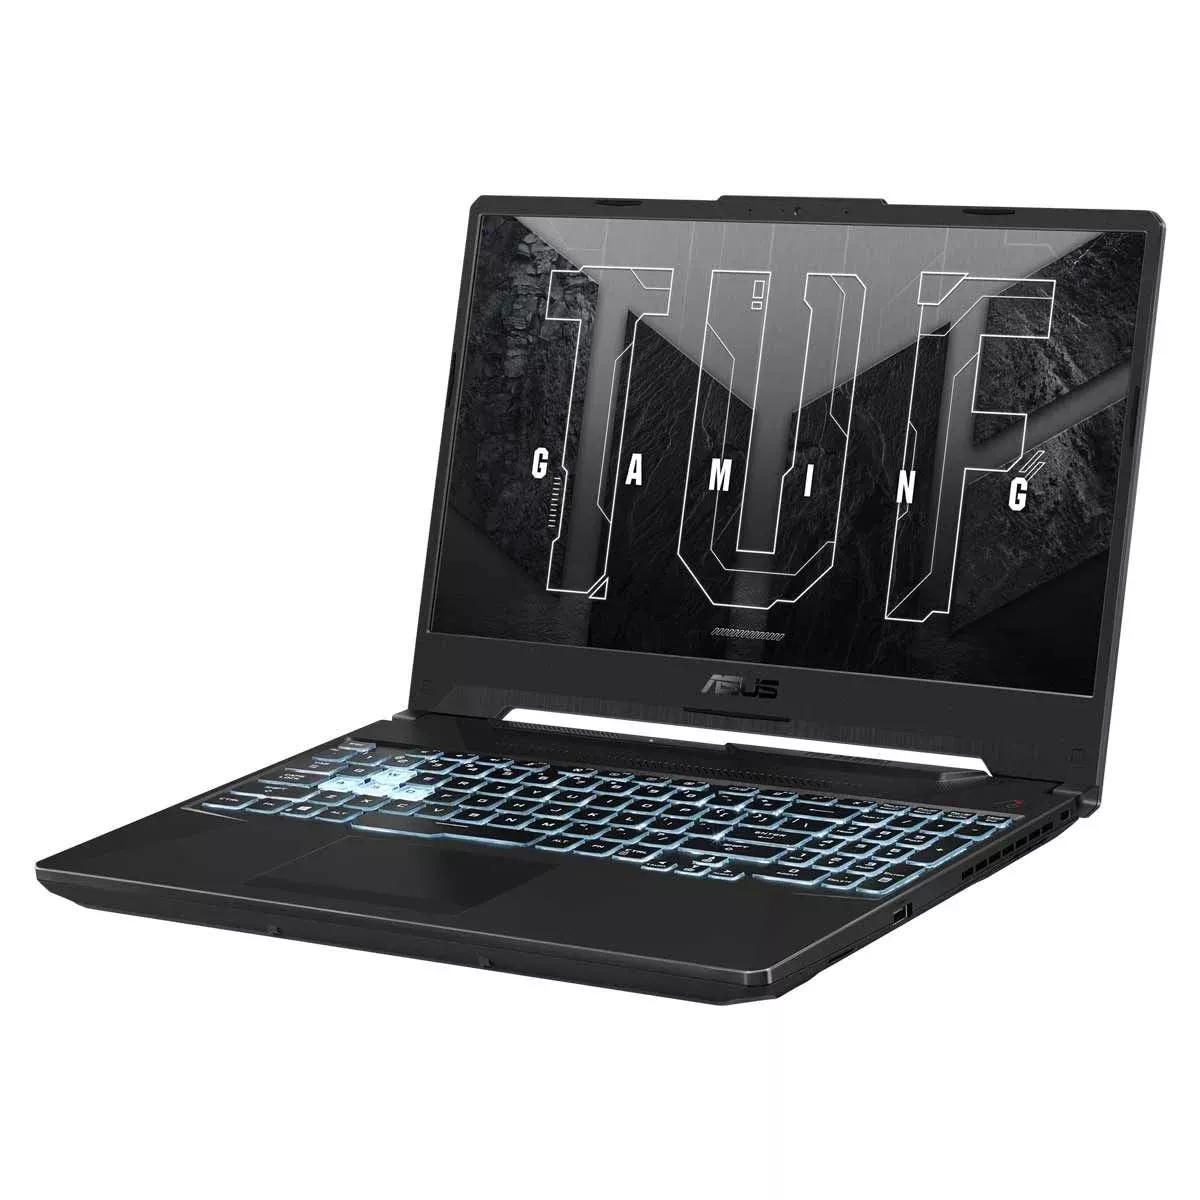 Asus TUF F15 Gaming Laptop i5 10Th Gen / GTX 1650/ 8GB RAM / 512GB SSD / 15.6" FHD 144Hz display